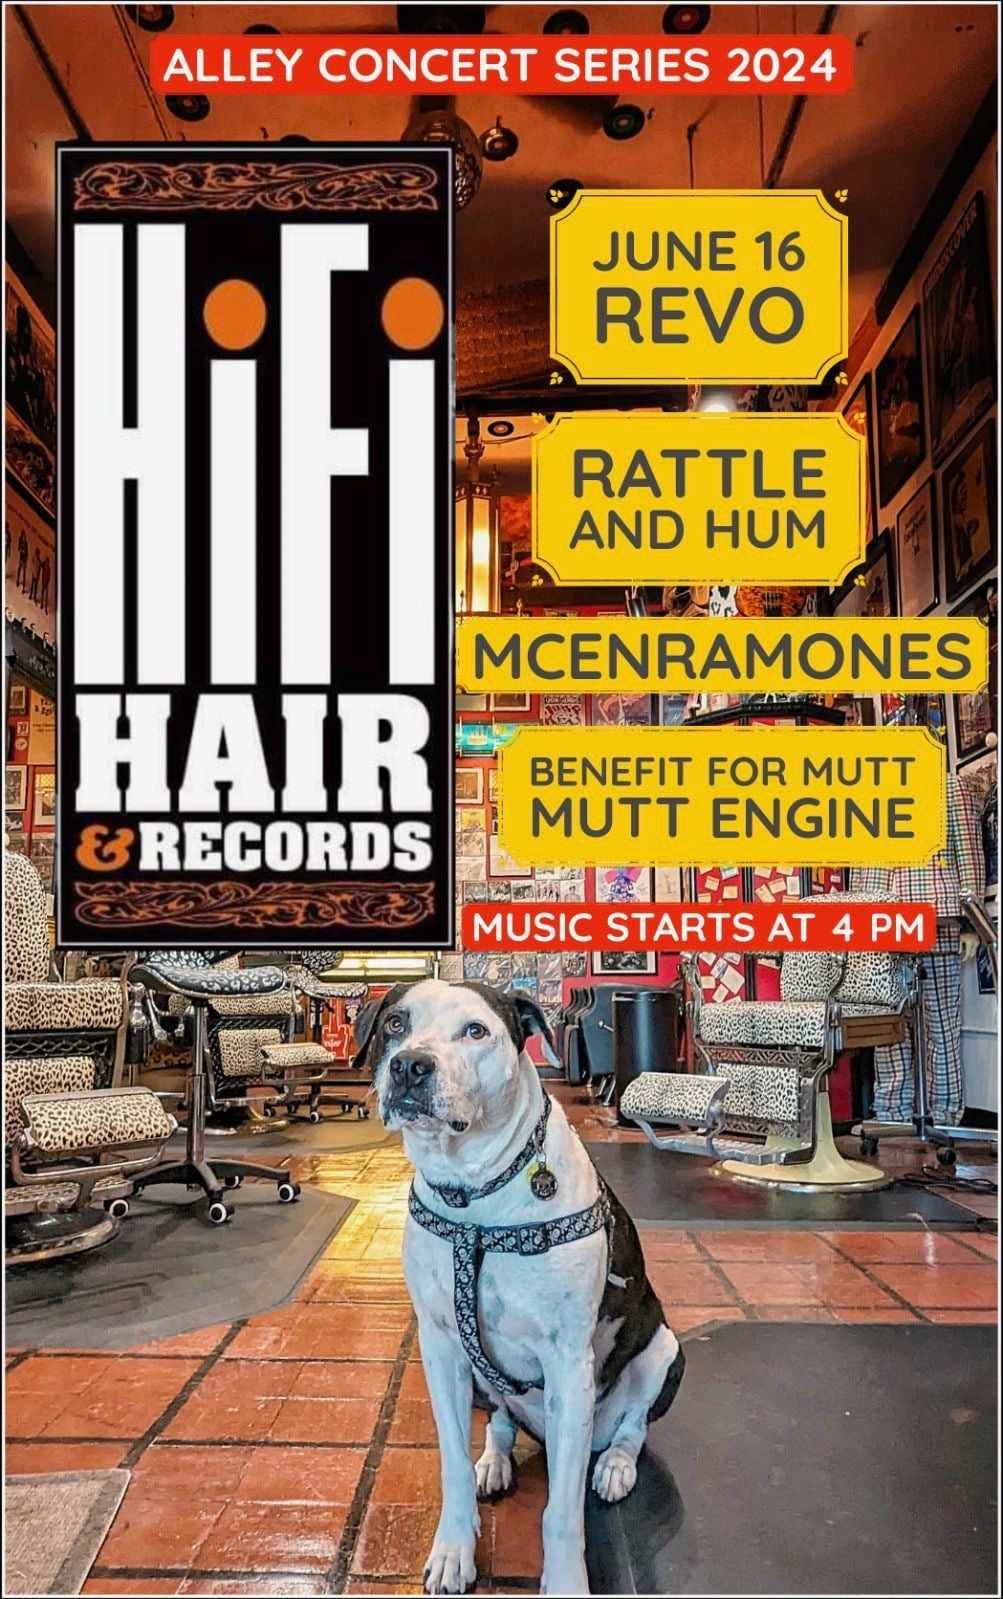 Mutt Mutt Engine Benefit at HiFi Hair & Records in Minneapolis